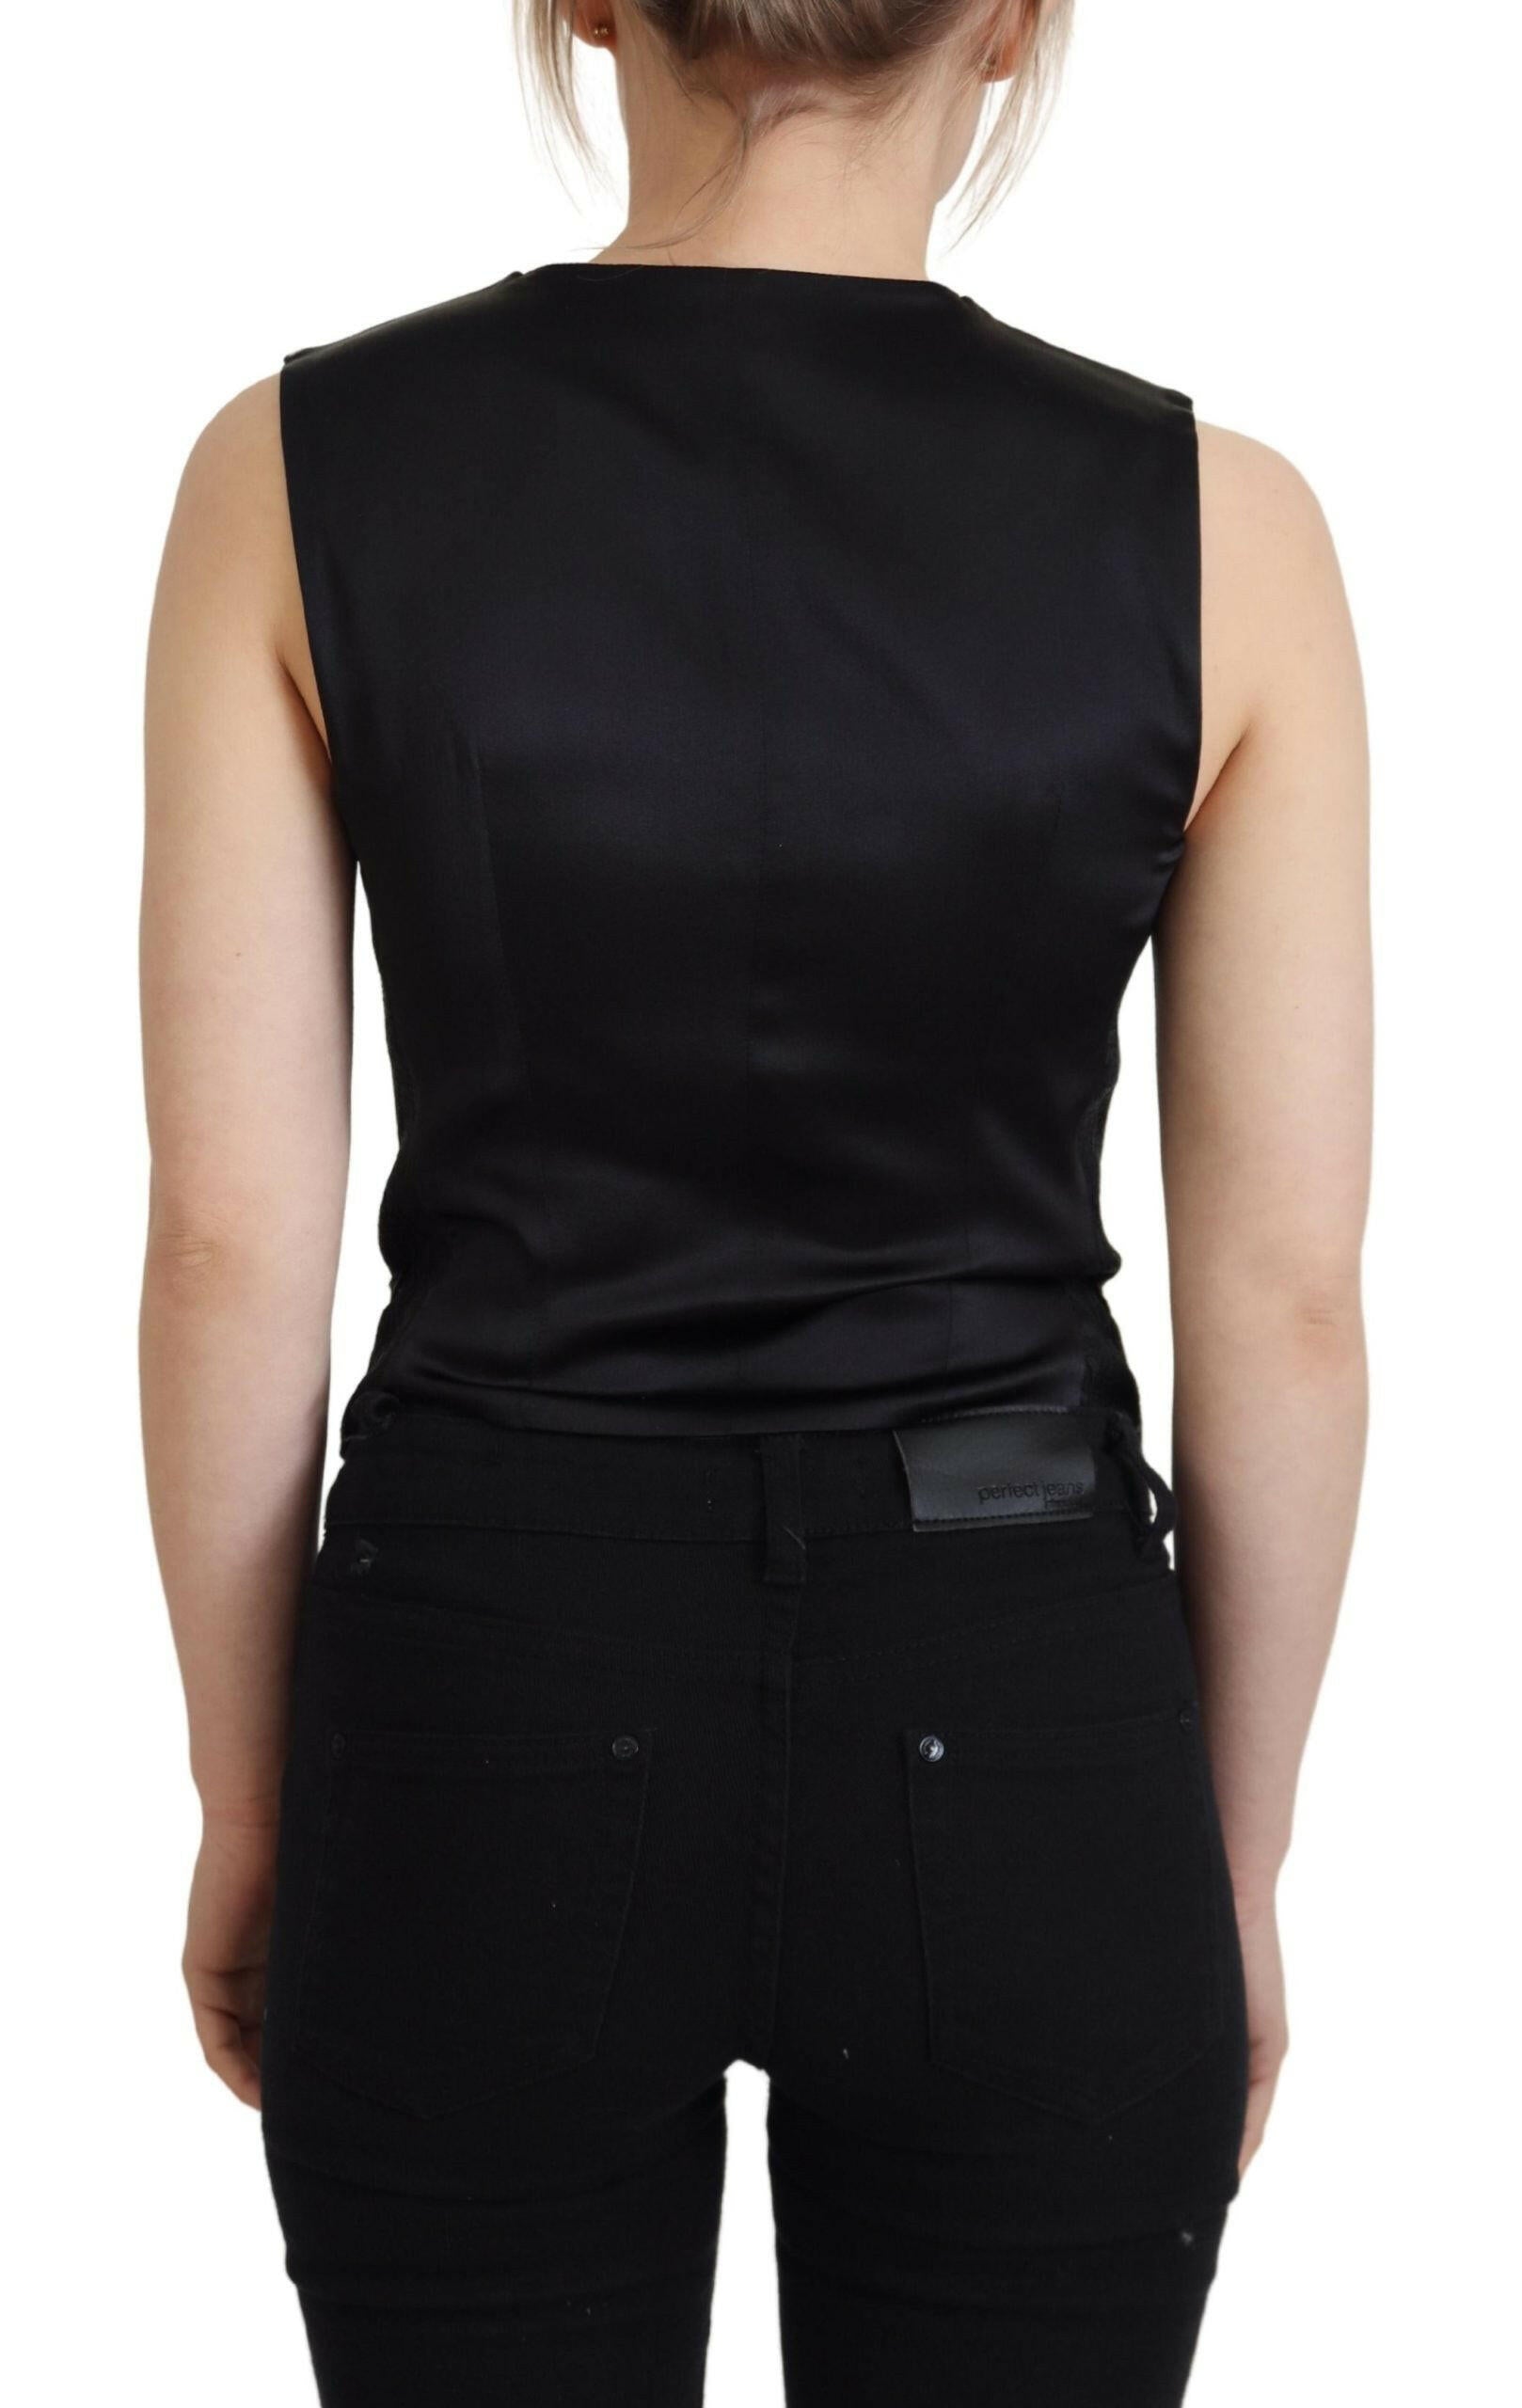 Dolce & Gabbana Black Brocade Button Down Sleeveless Vest Top - GENUINE AUTHENTIC BRAND LLC  